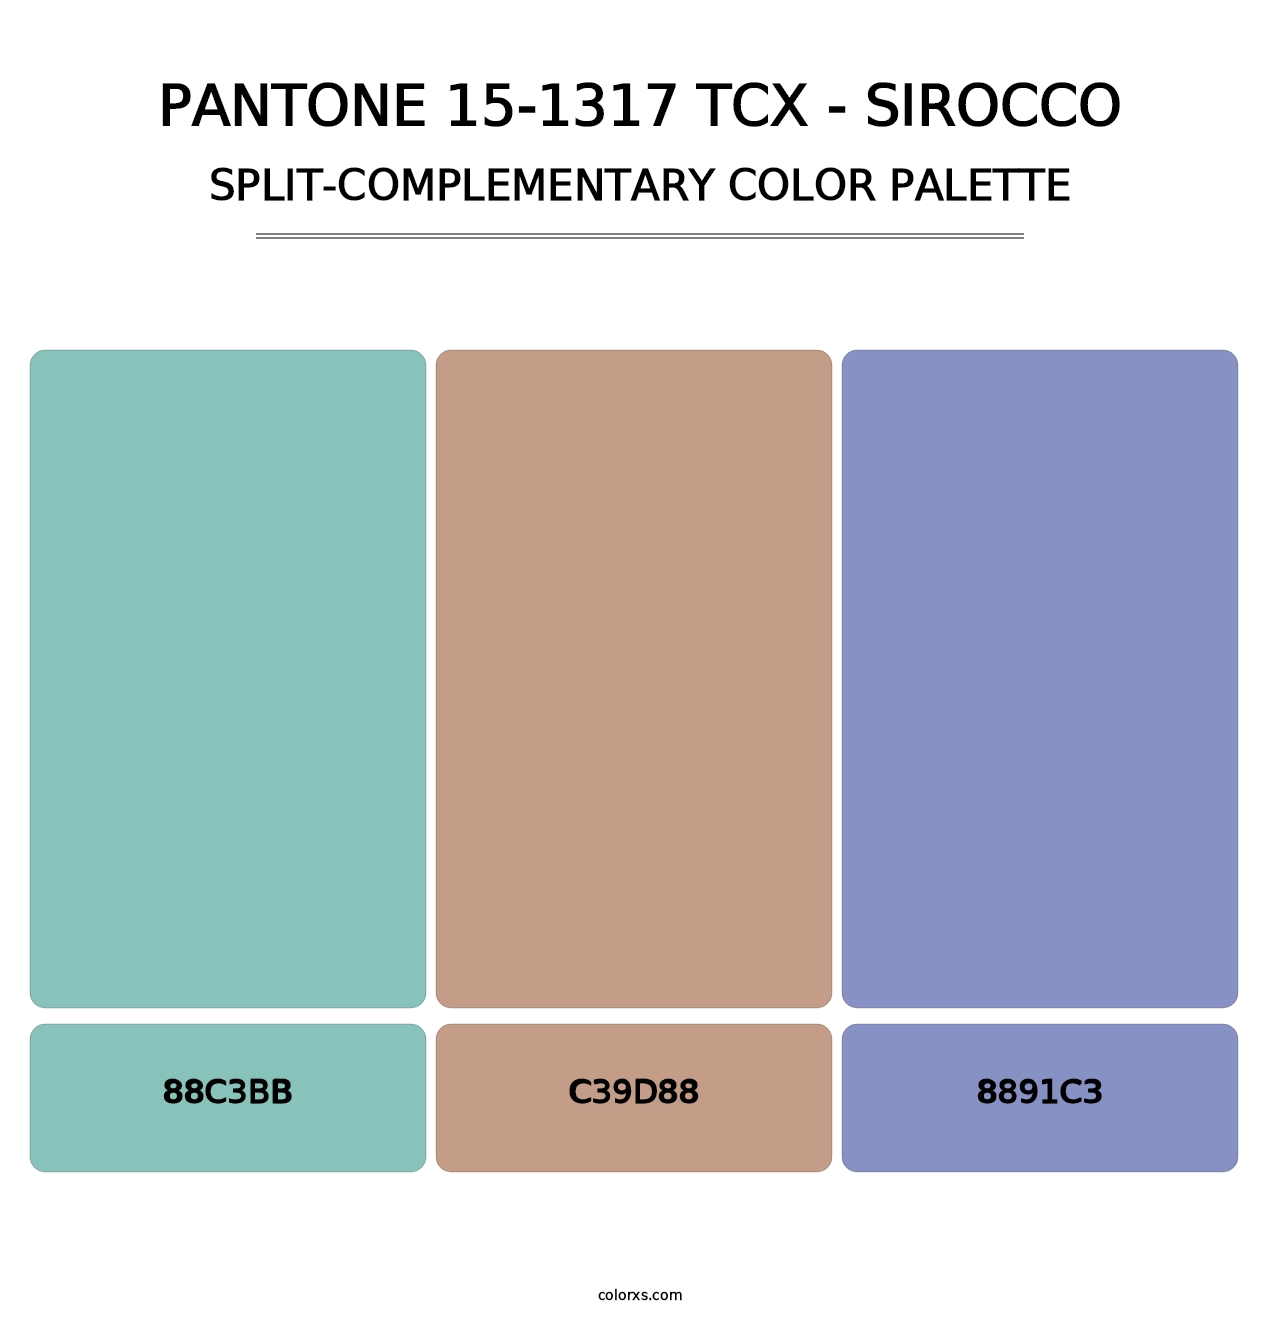 PANTONE 15-1317 TCX - Sirocco - Split-Complementary Color Palette